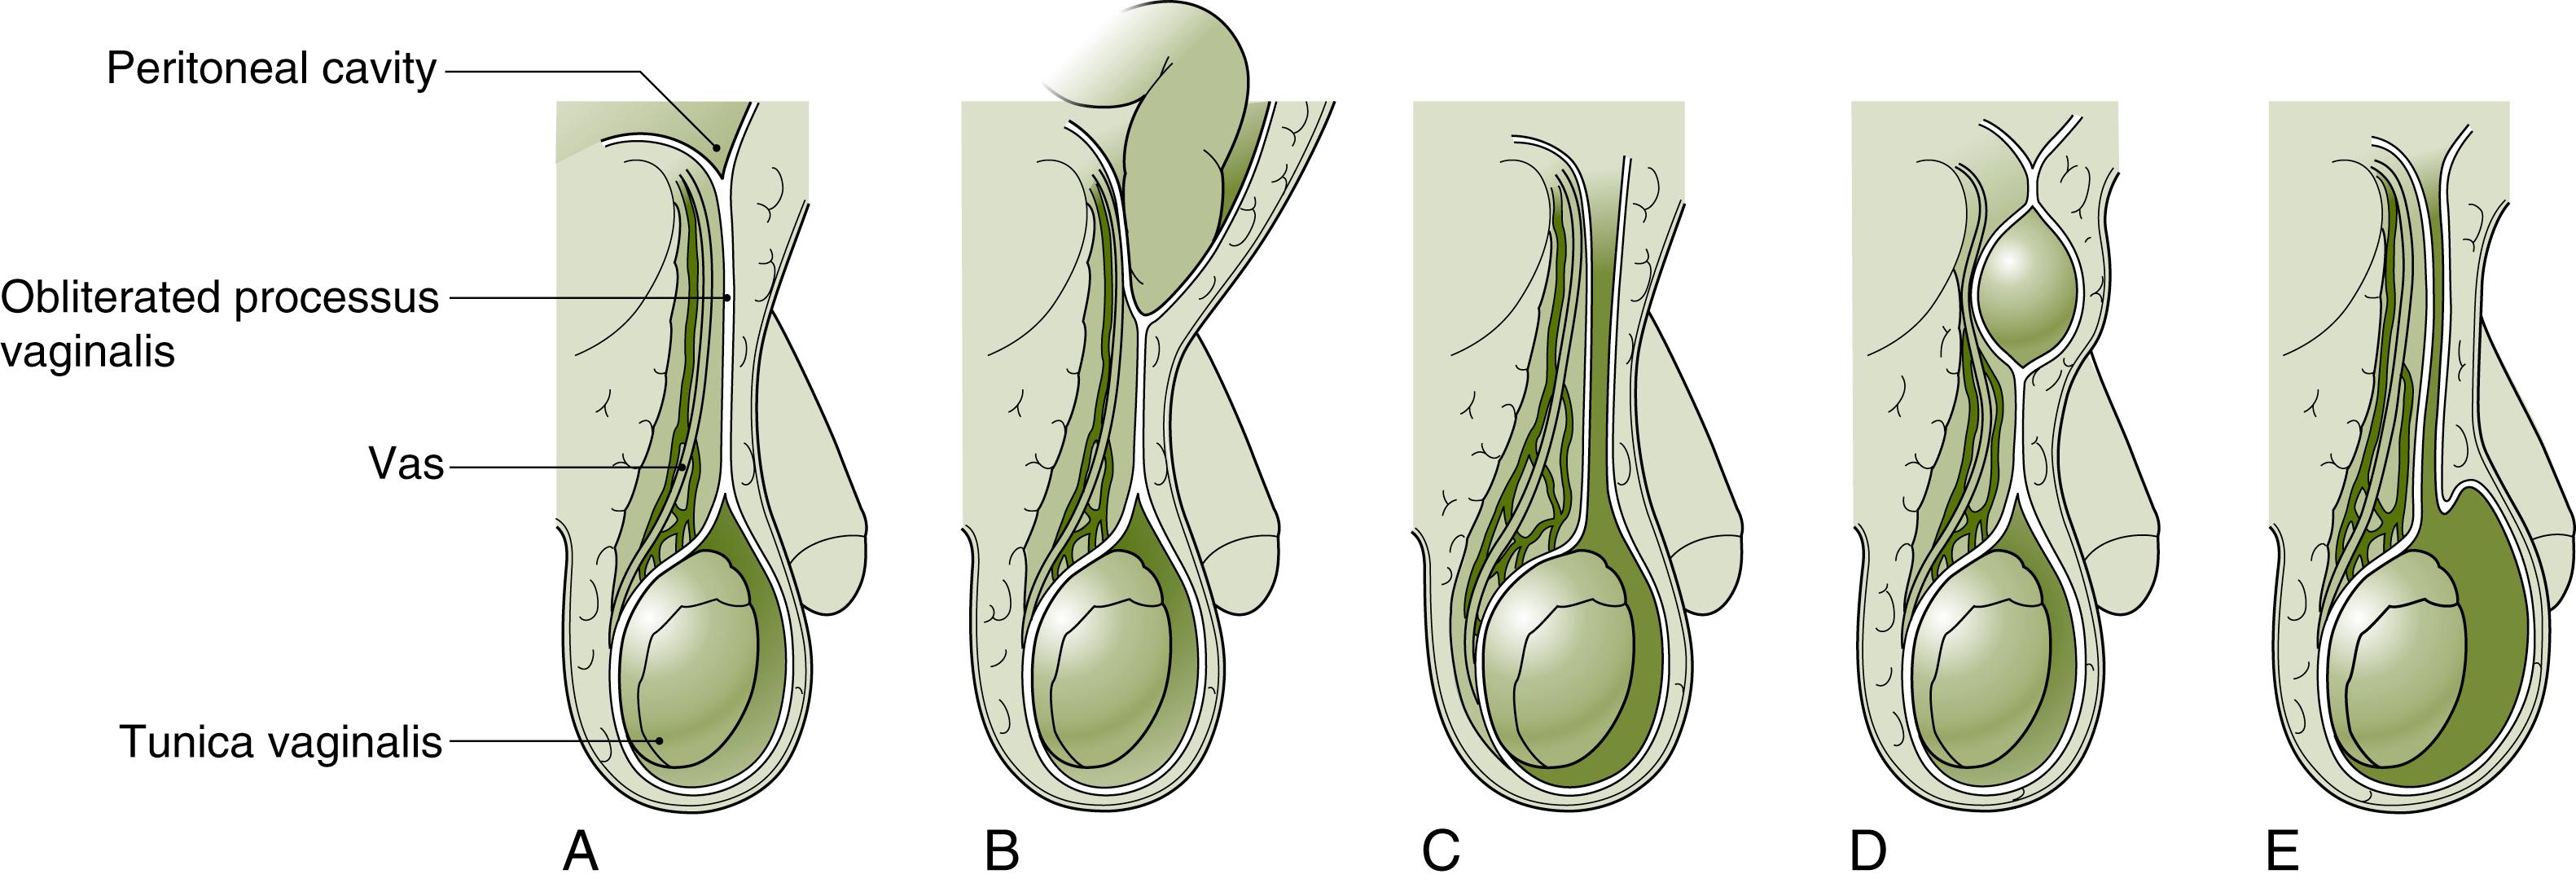 Fig. 52.1, Spectrum of Anatomic Abnormalities of the Processus Vaginalis.